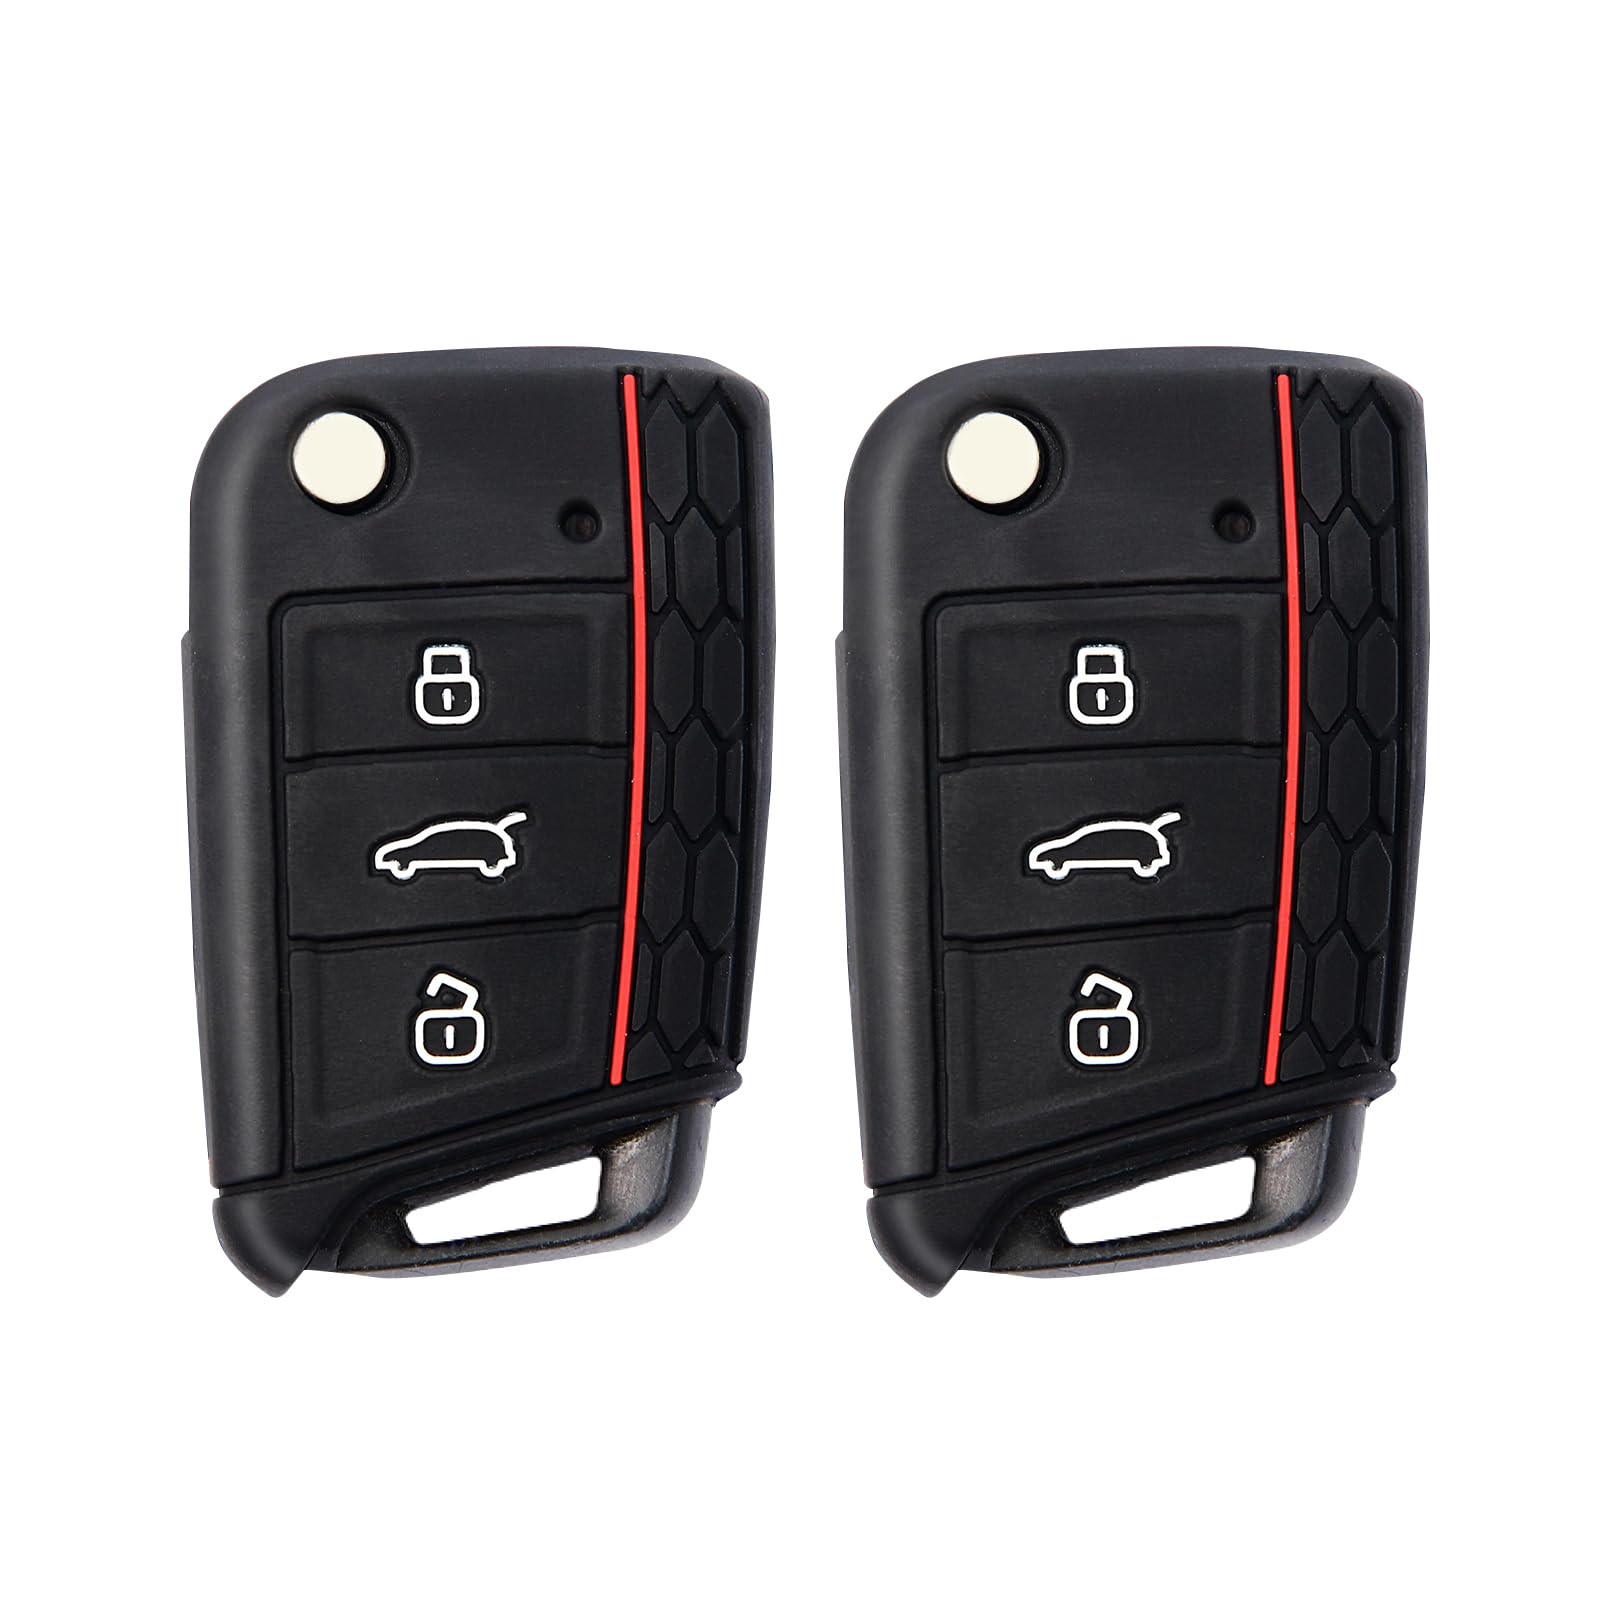 2 Stück Autoschlüssel Hülle, Schlüsselbox ,Autoschlüssel Schutzhülle kompatibel mit VW Golf 7、Polo、Tiguan、Skoda 3-Tasten Schlüsselhülle (Schwarz-Rot) von Mythosurge